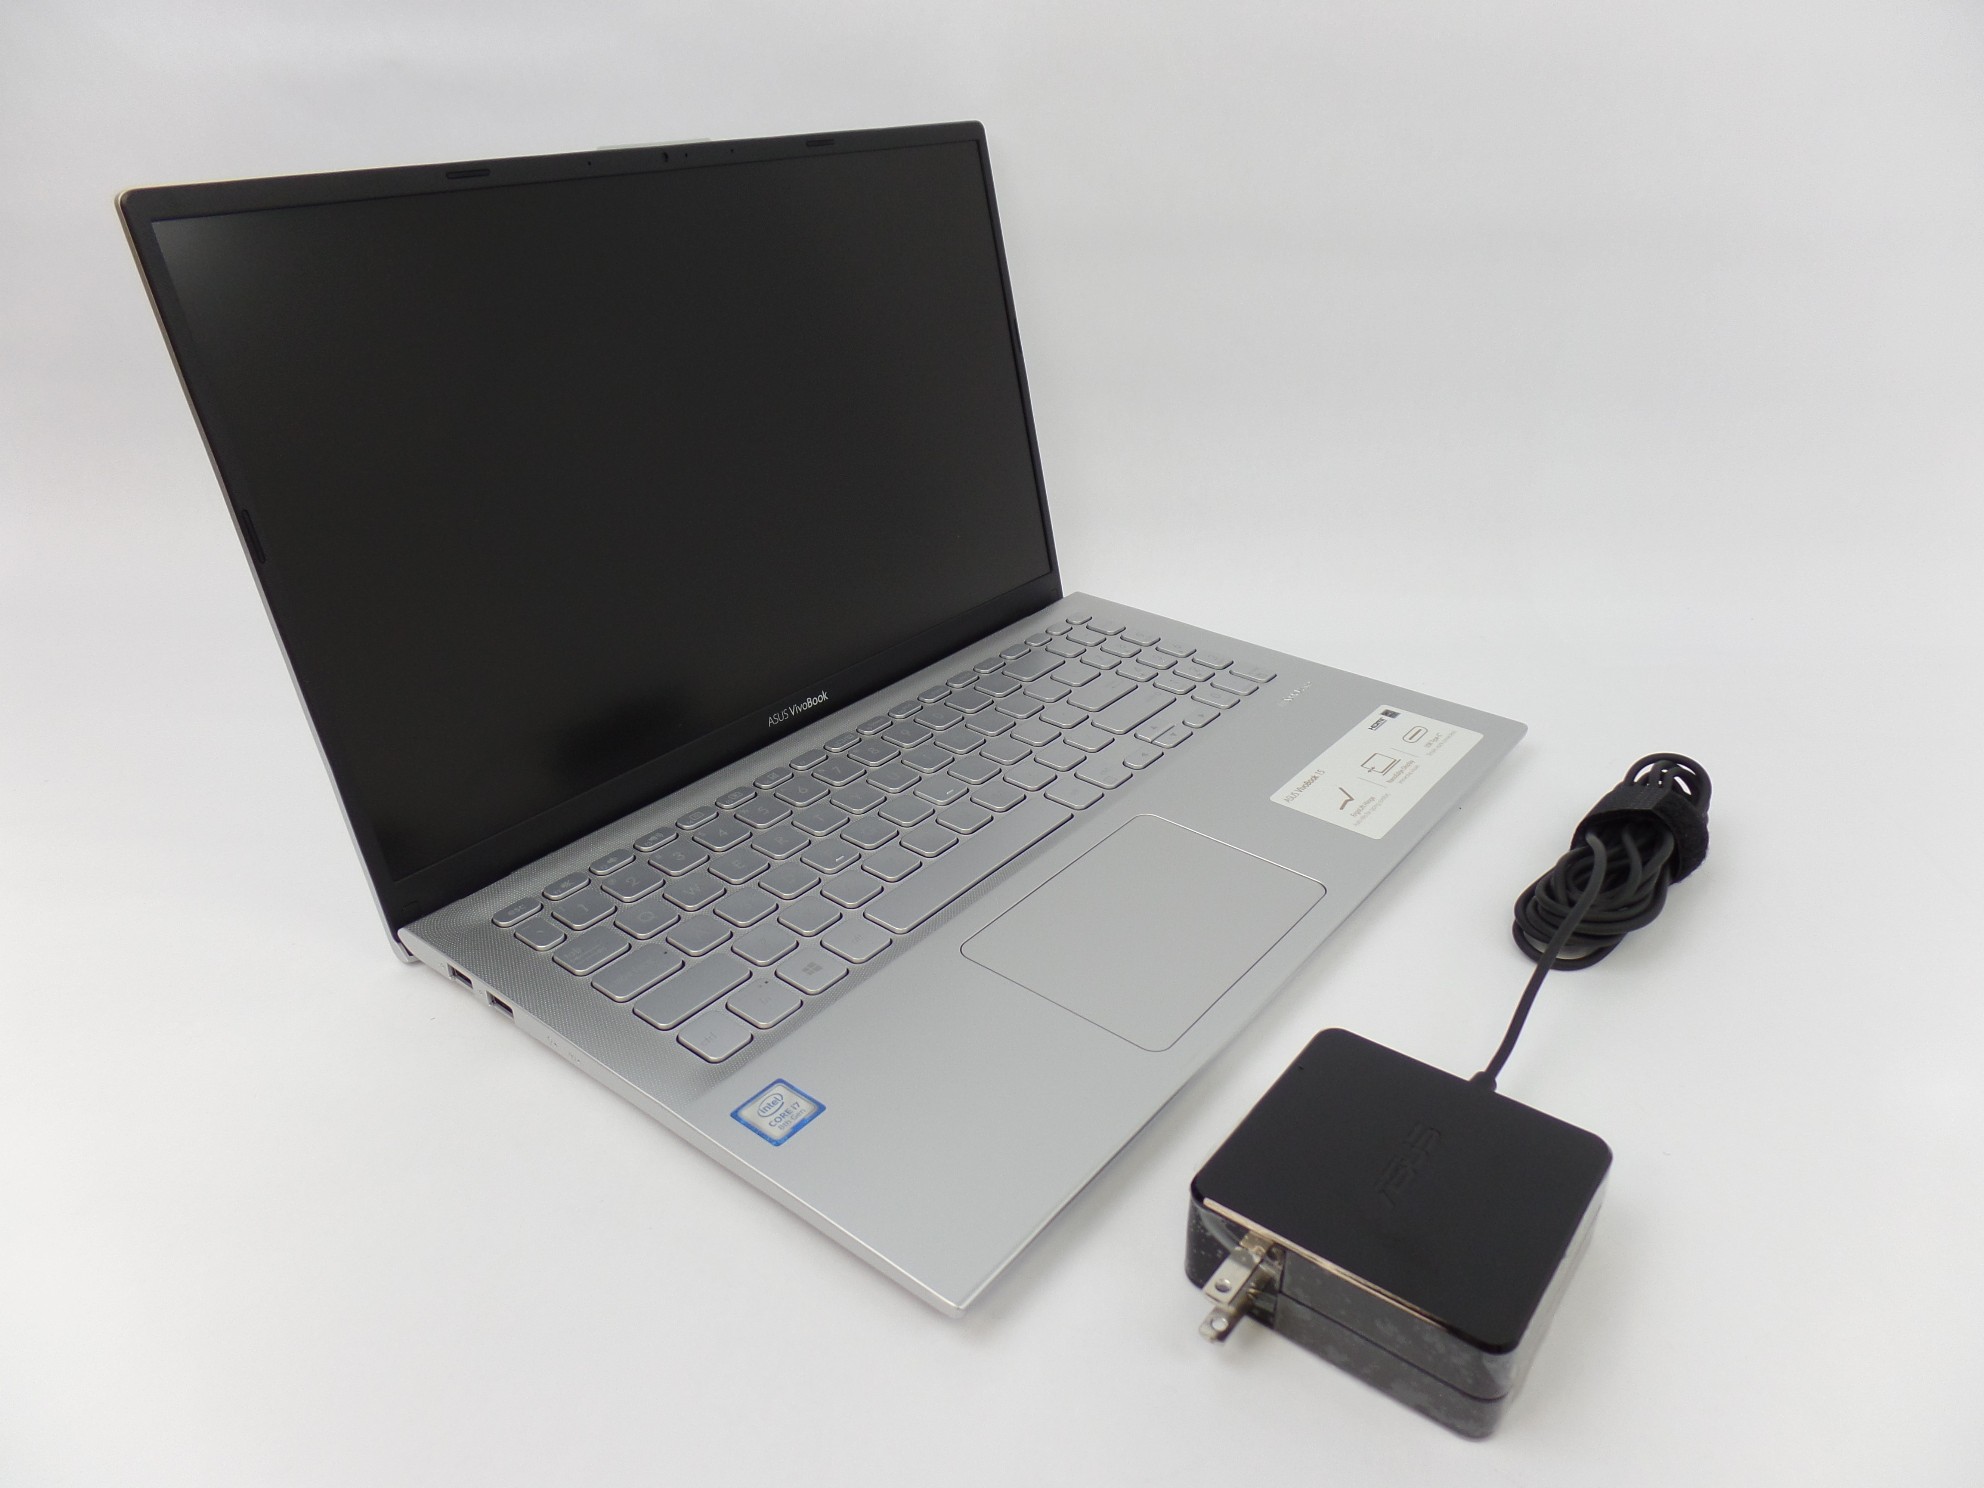 Asus VivoBook X512FA-BI7B 15.6" FHD i7-8565U 1.8GHz 12GB 256GB SSD W10H Laptop S